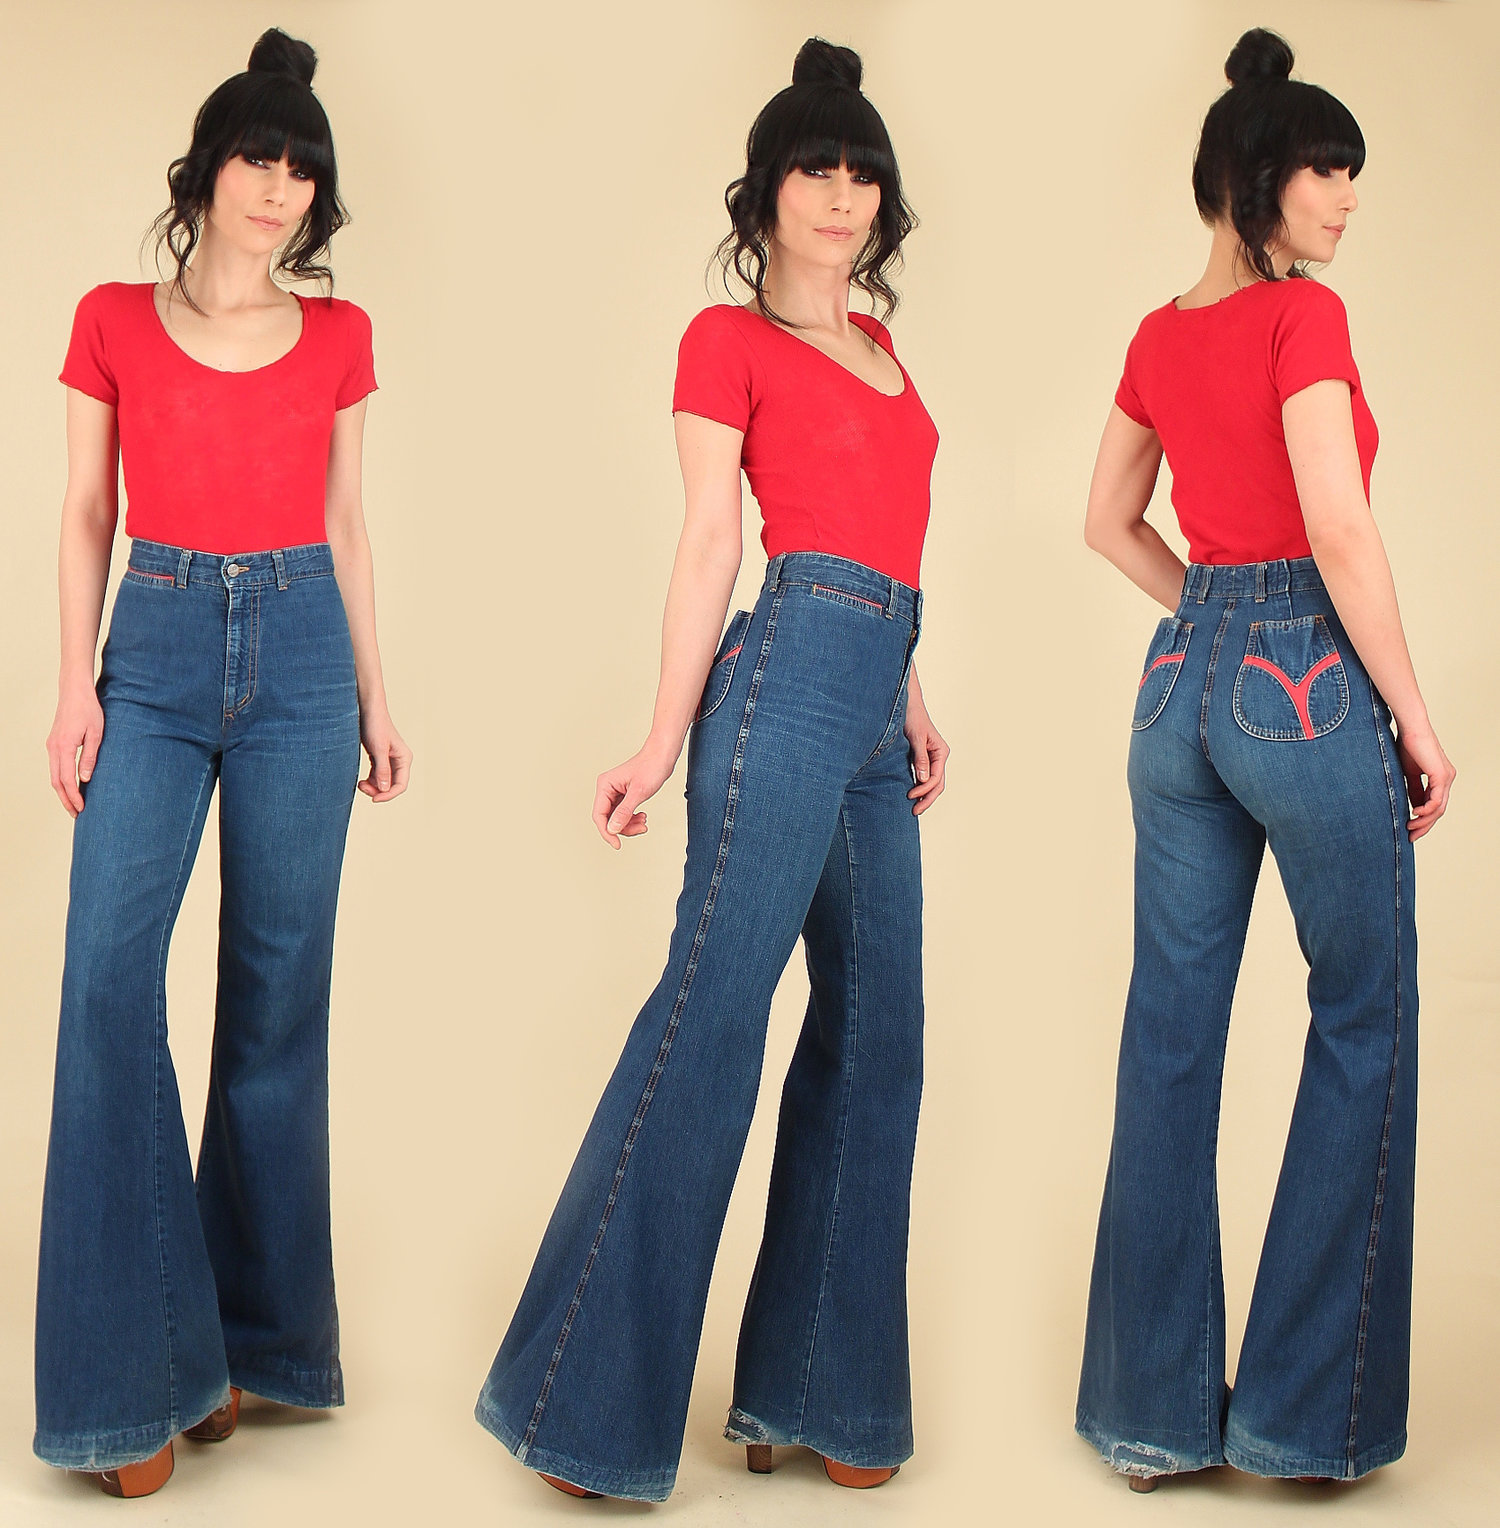 Vintage 70s High Waisted Bell Bottom Jeans // by Chemin de Fer ...